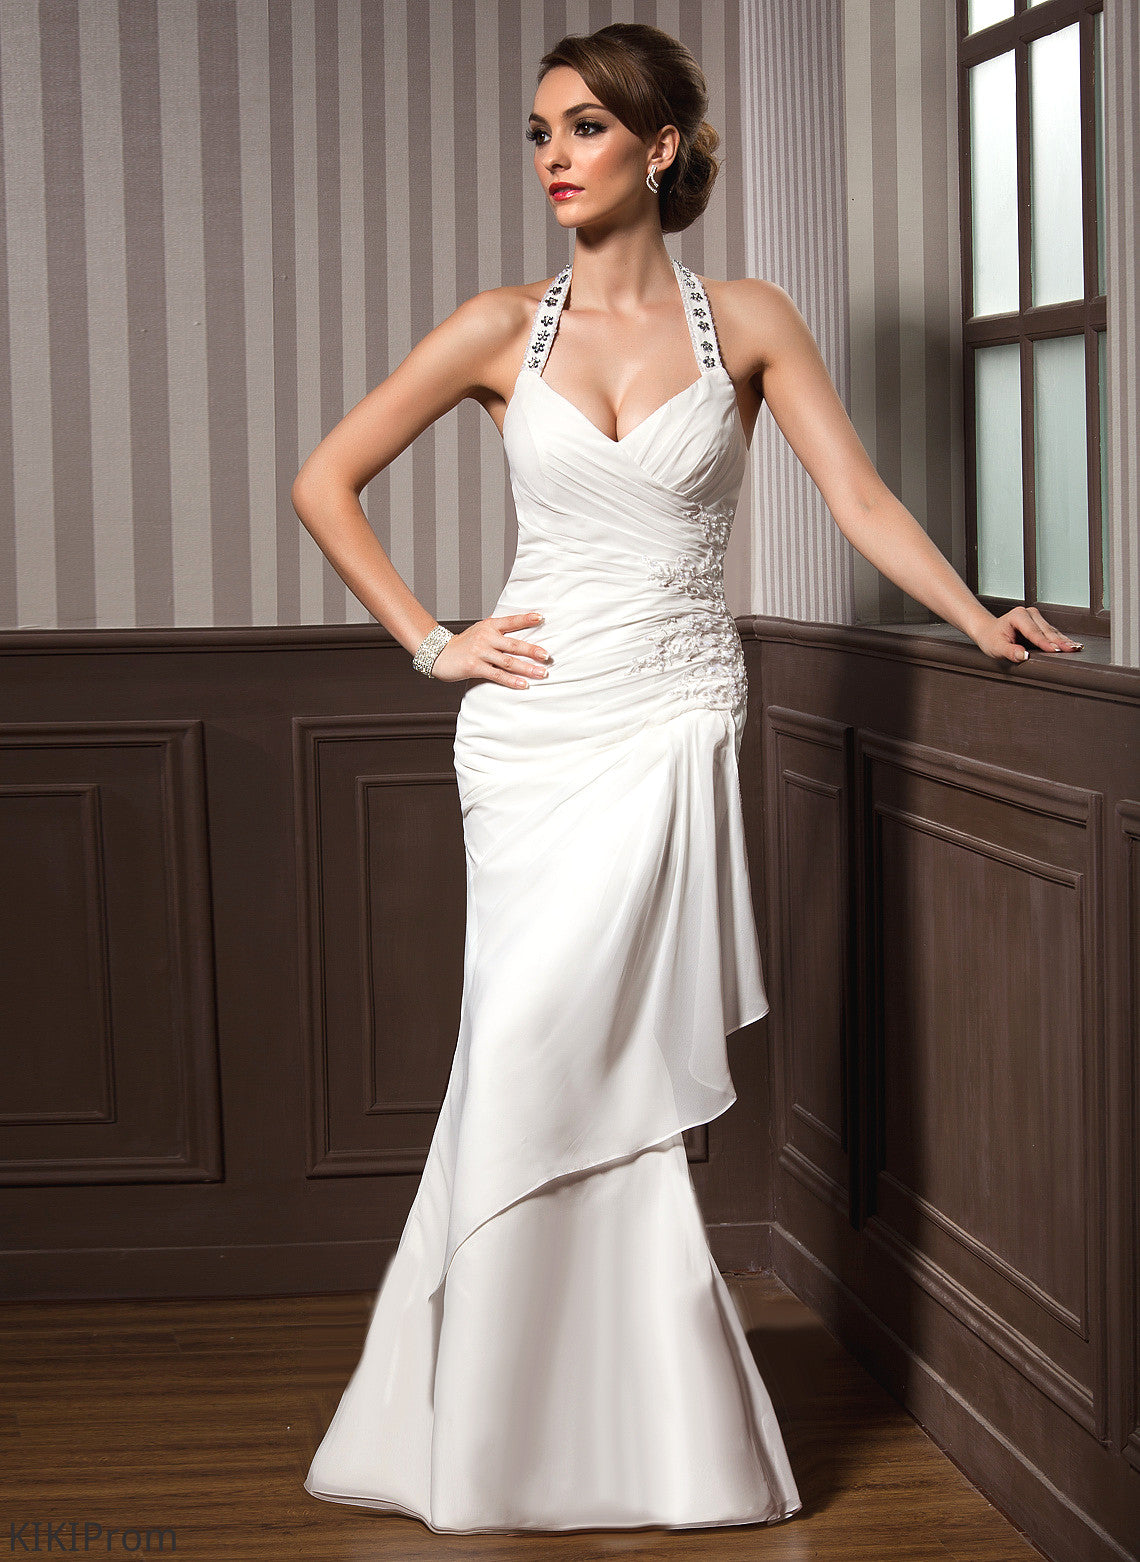 Sequins Moira Ruffle Lace Halter Floor-Length Sheath/Column Dress Wedding Wedding Dresses Appliques With Beading Chiffon